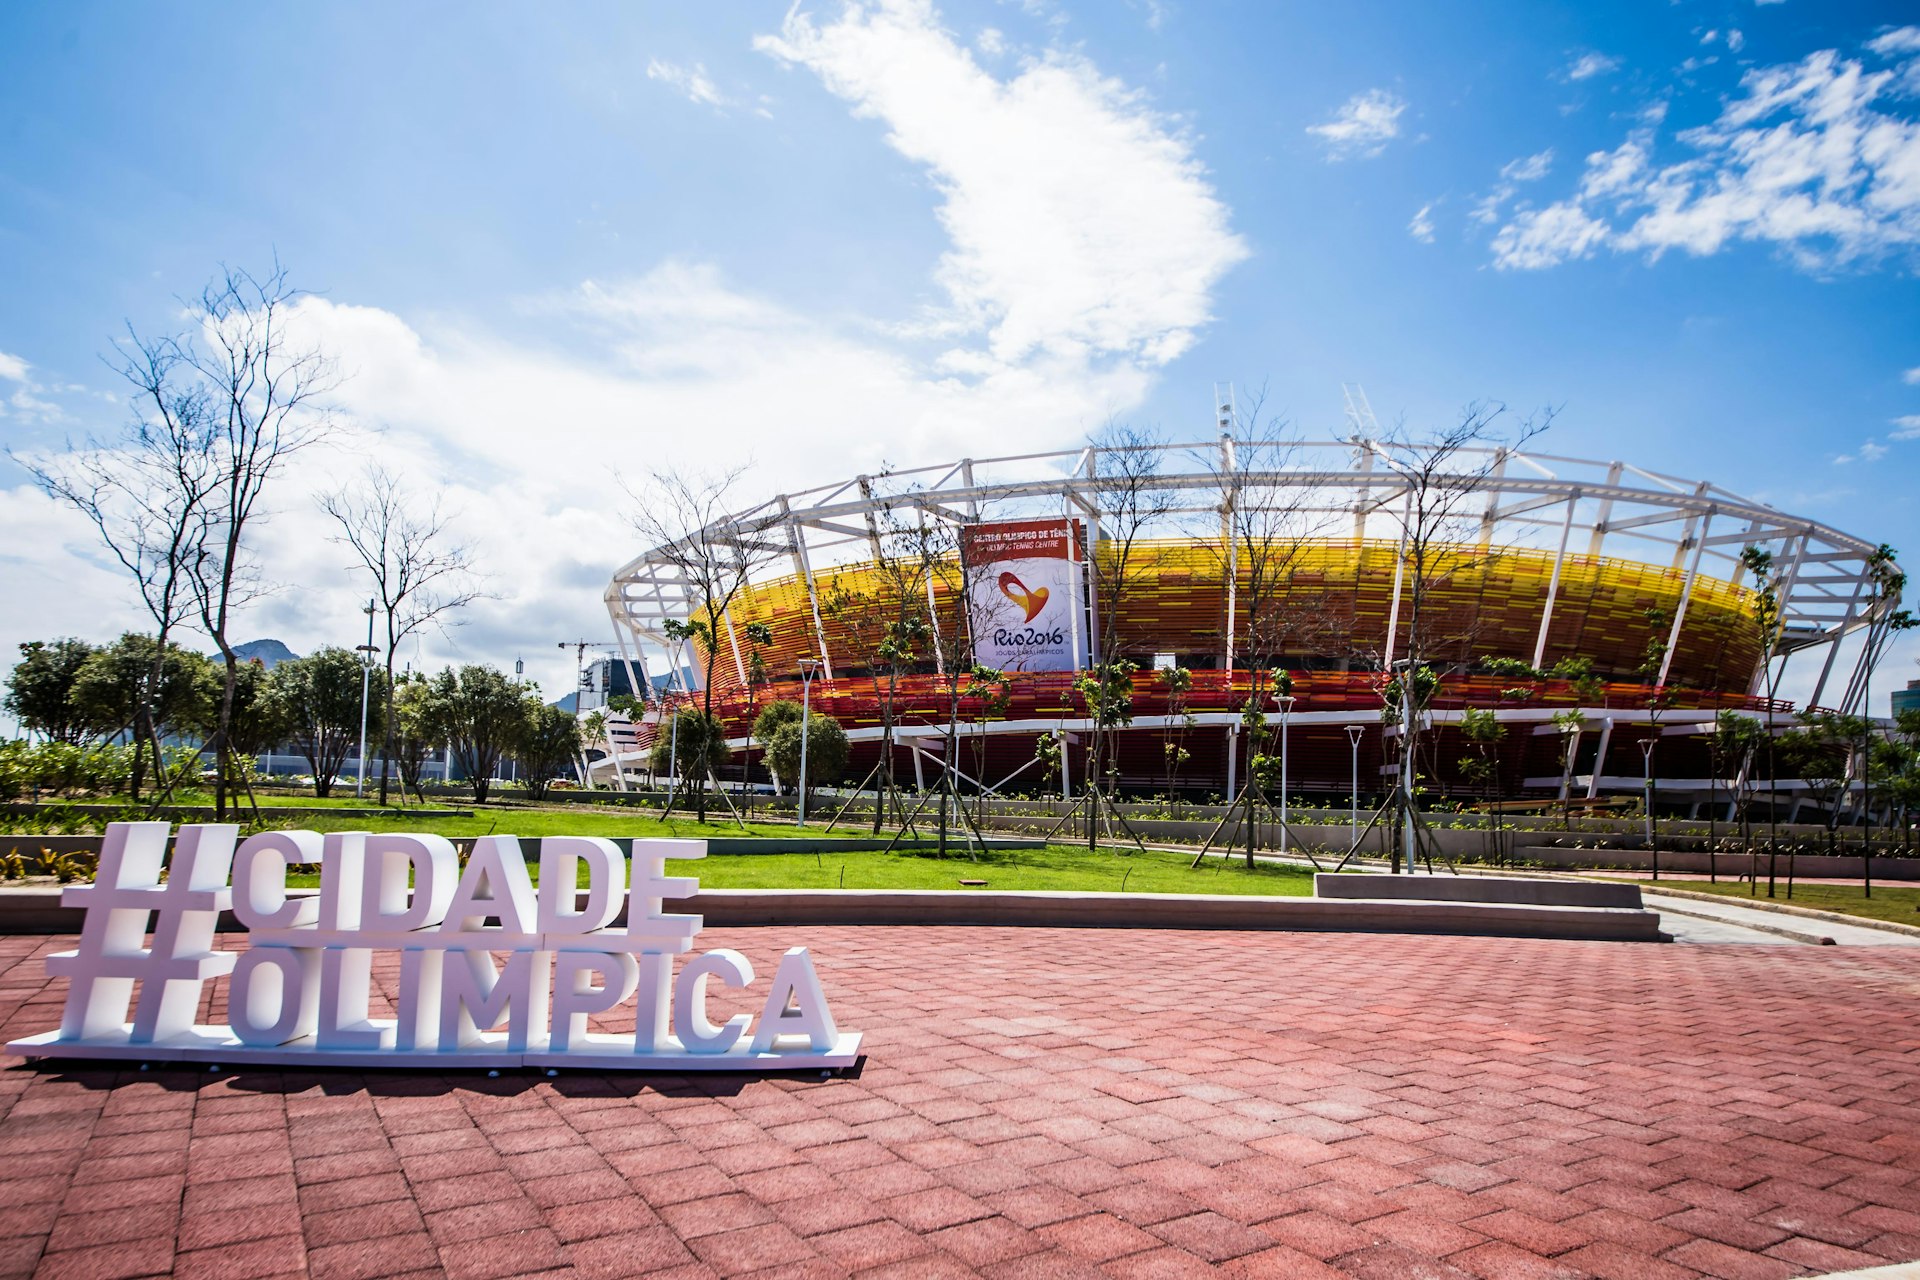 Tennis Center at Rio's Olympic Park © Renato Sette Camara / Rio City Hall